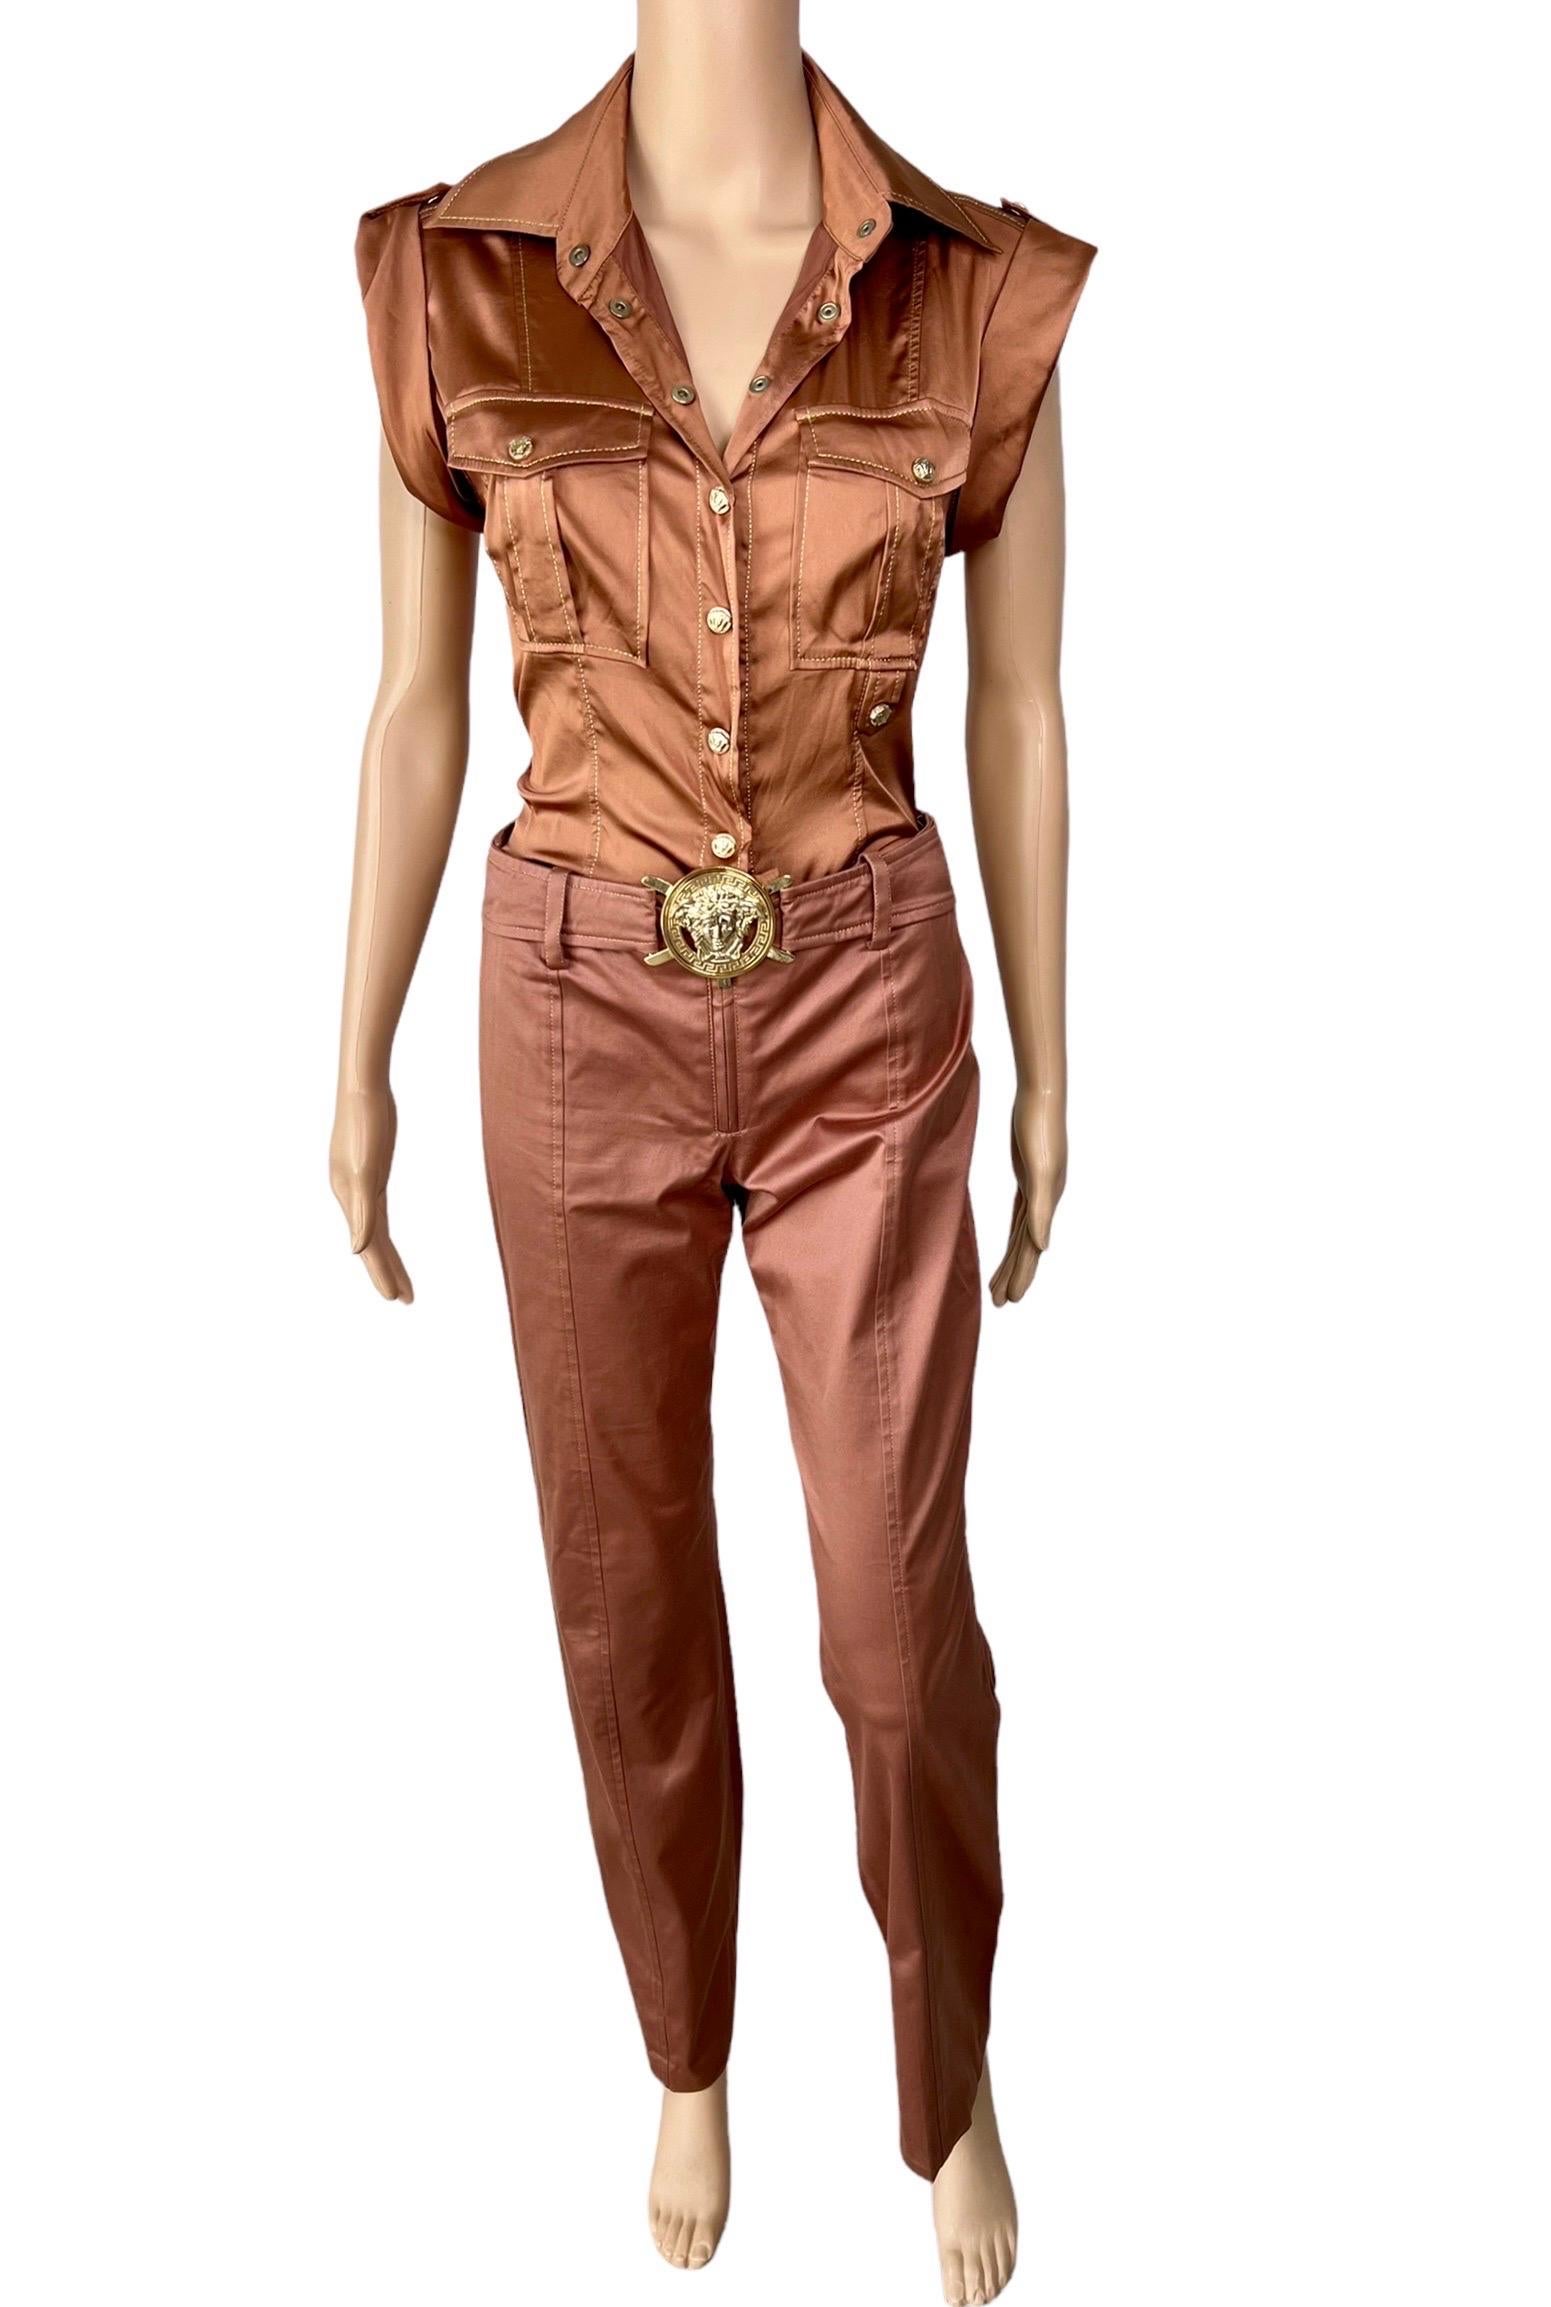 Women's or Men's Versace S/S 2005 Runway Blouse Shirt Top & Medusa Logo Belted Pants 2 Piece Set For Sale